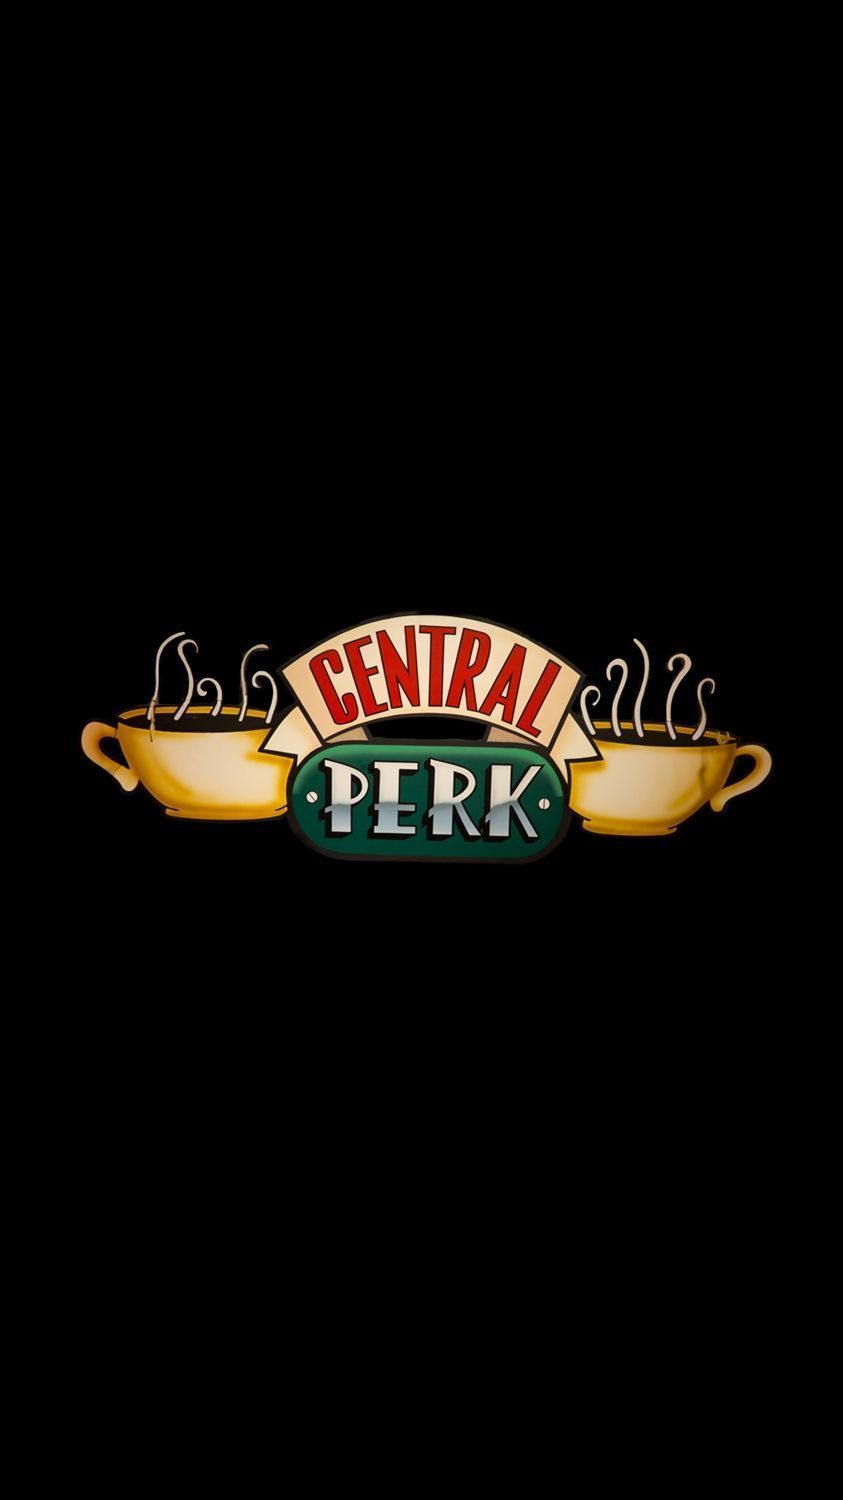 Central Perk Wallpaper Free Central Perk Background